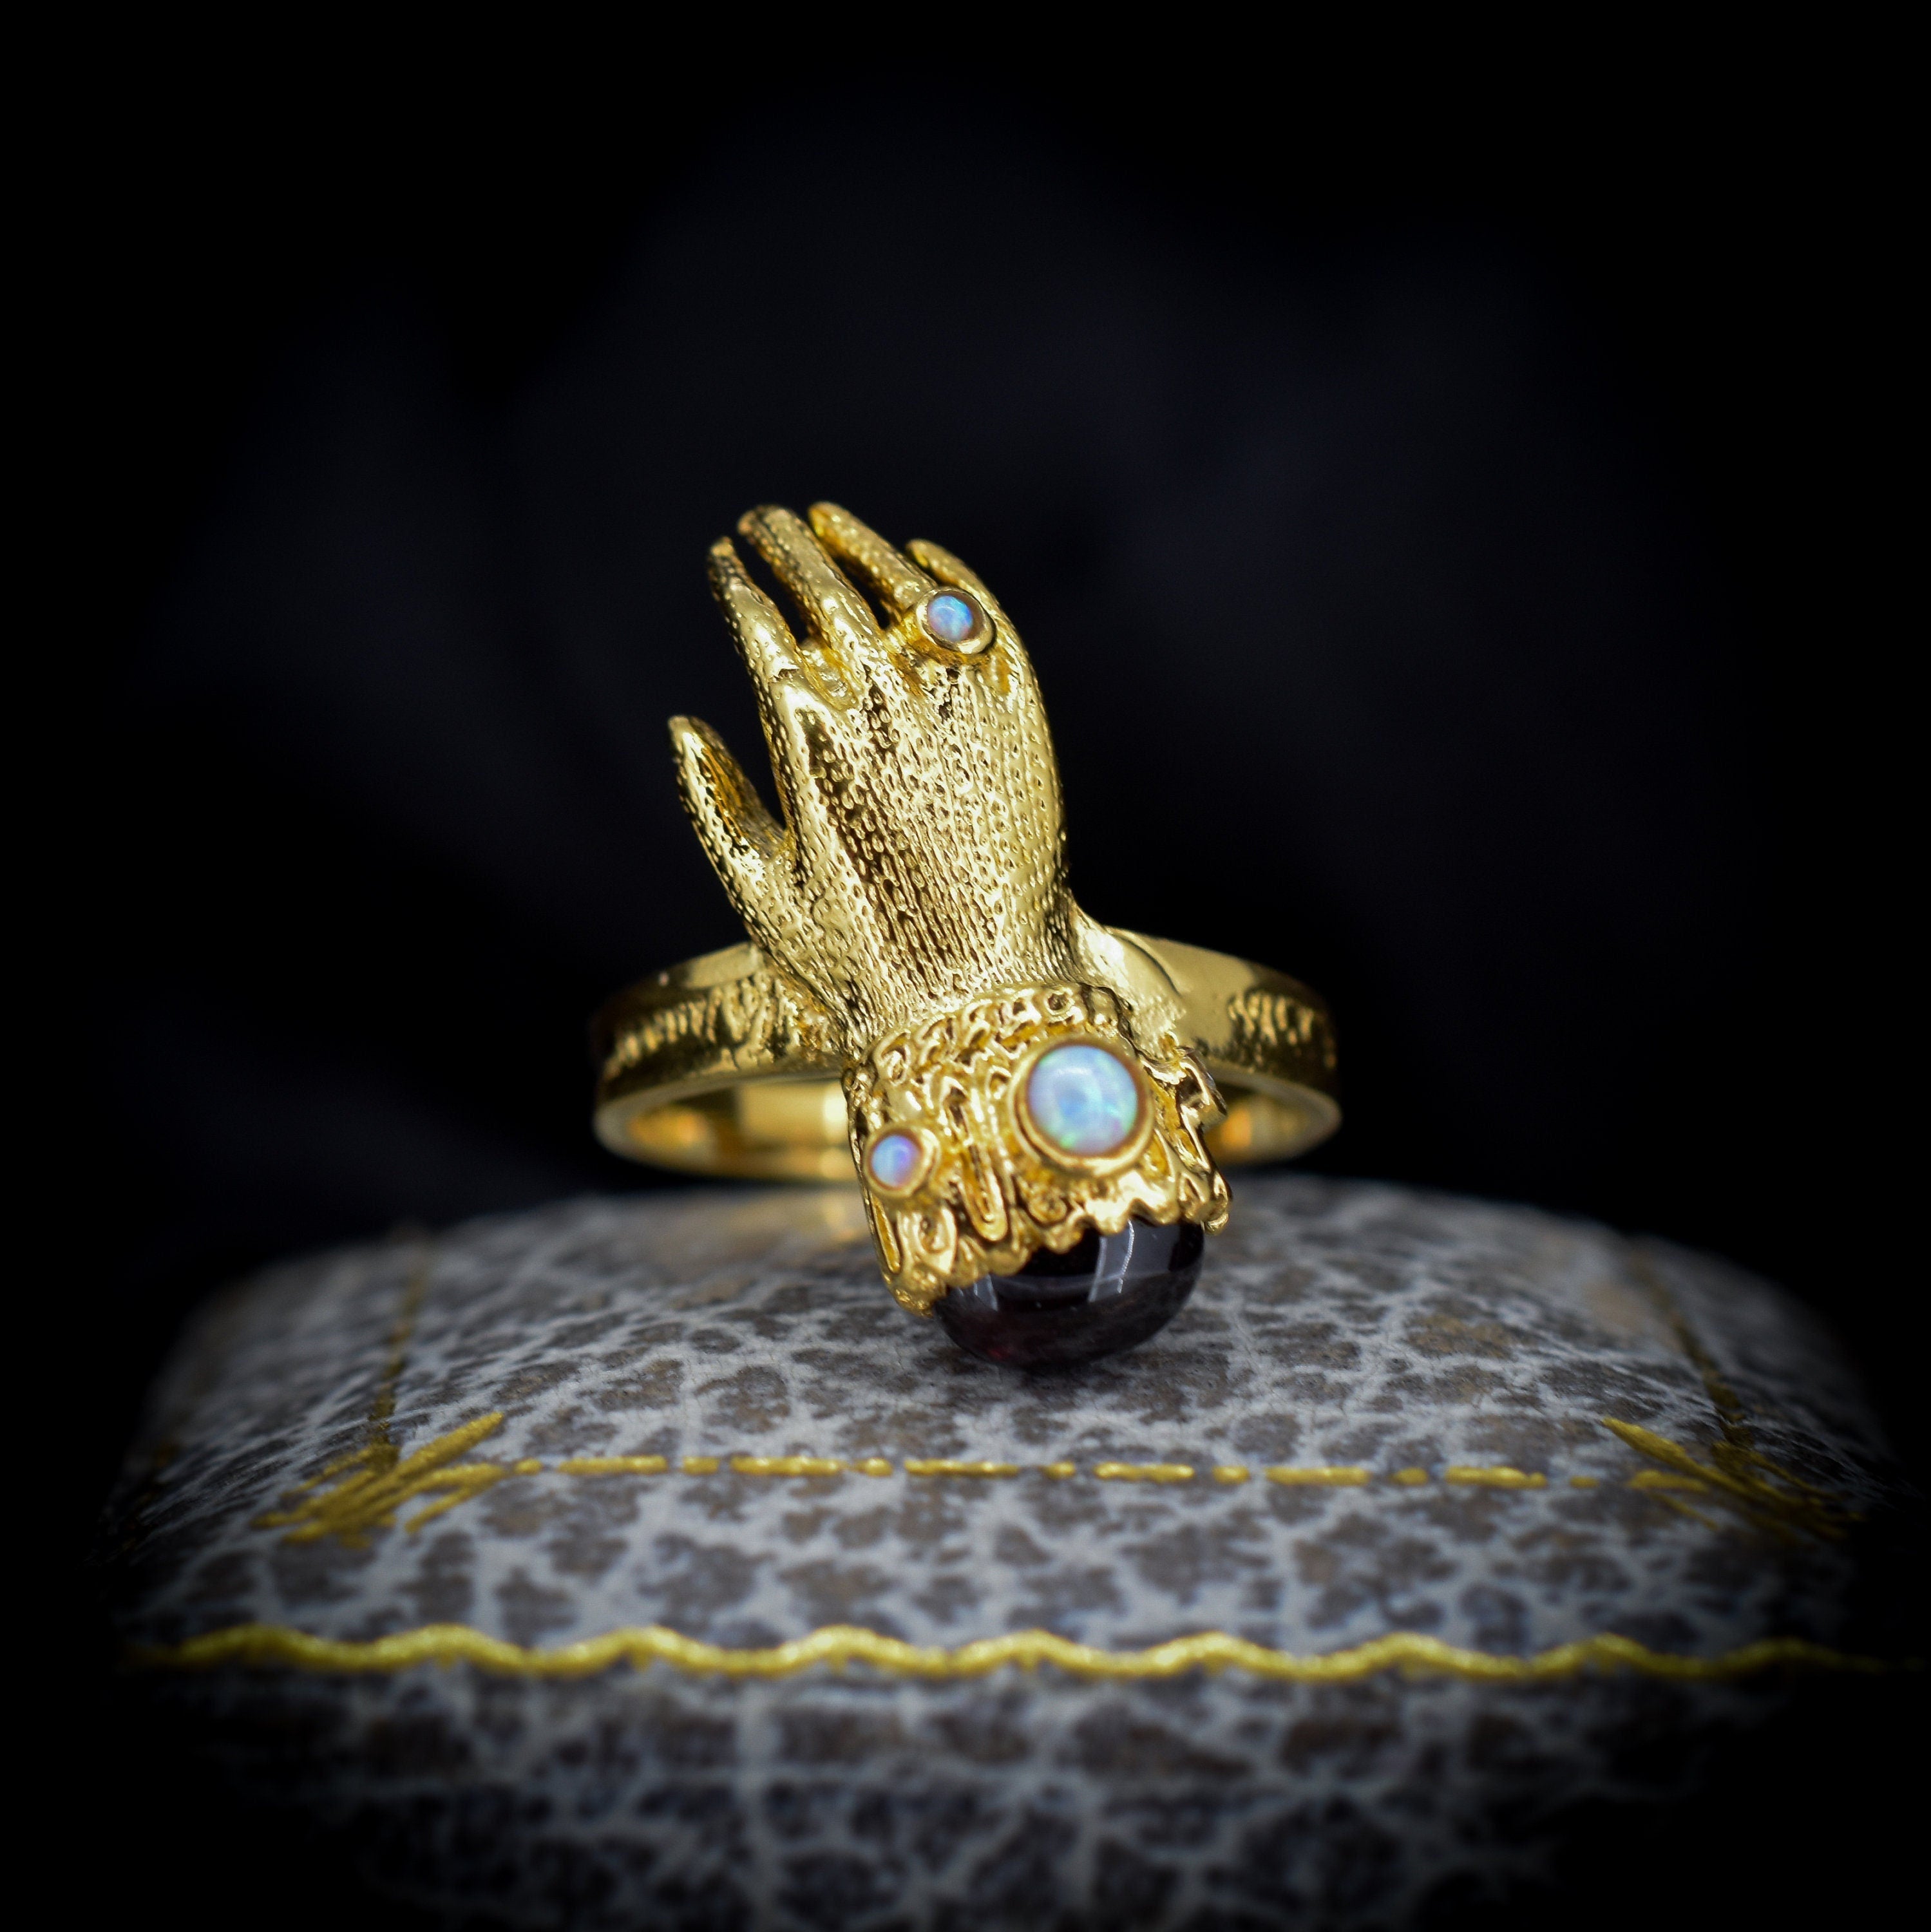 Buy DULCI Antique Gold Metal Om Namah Shivay Religious Occasions Finger Ring  for Men Women at Amazon.in